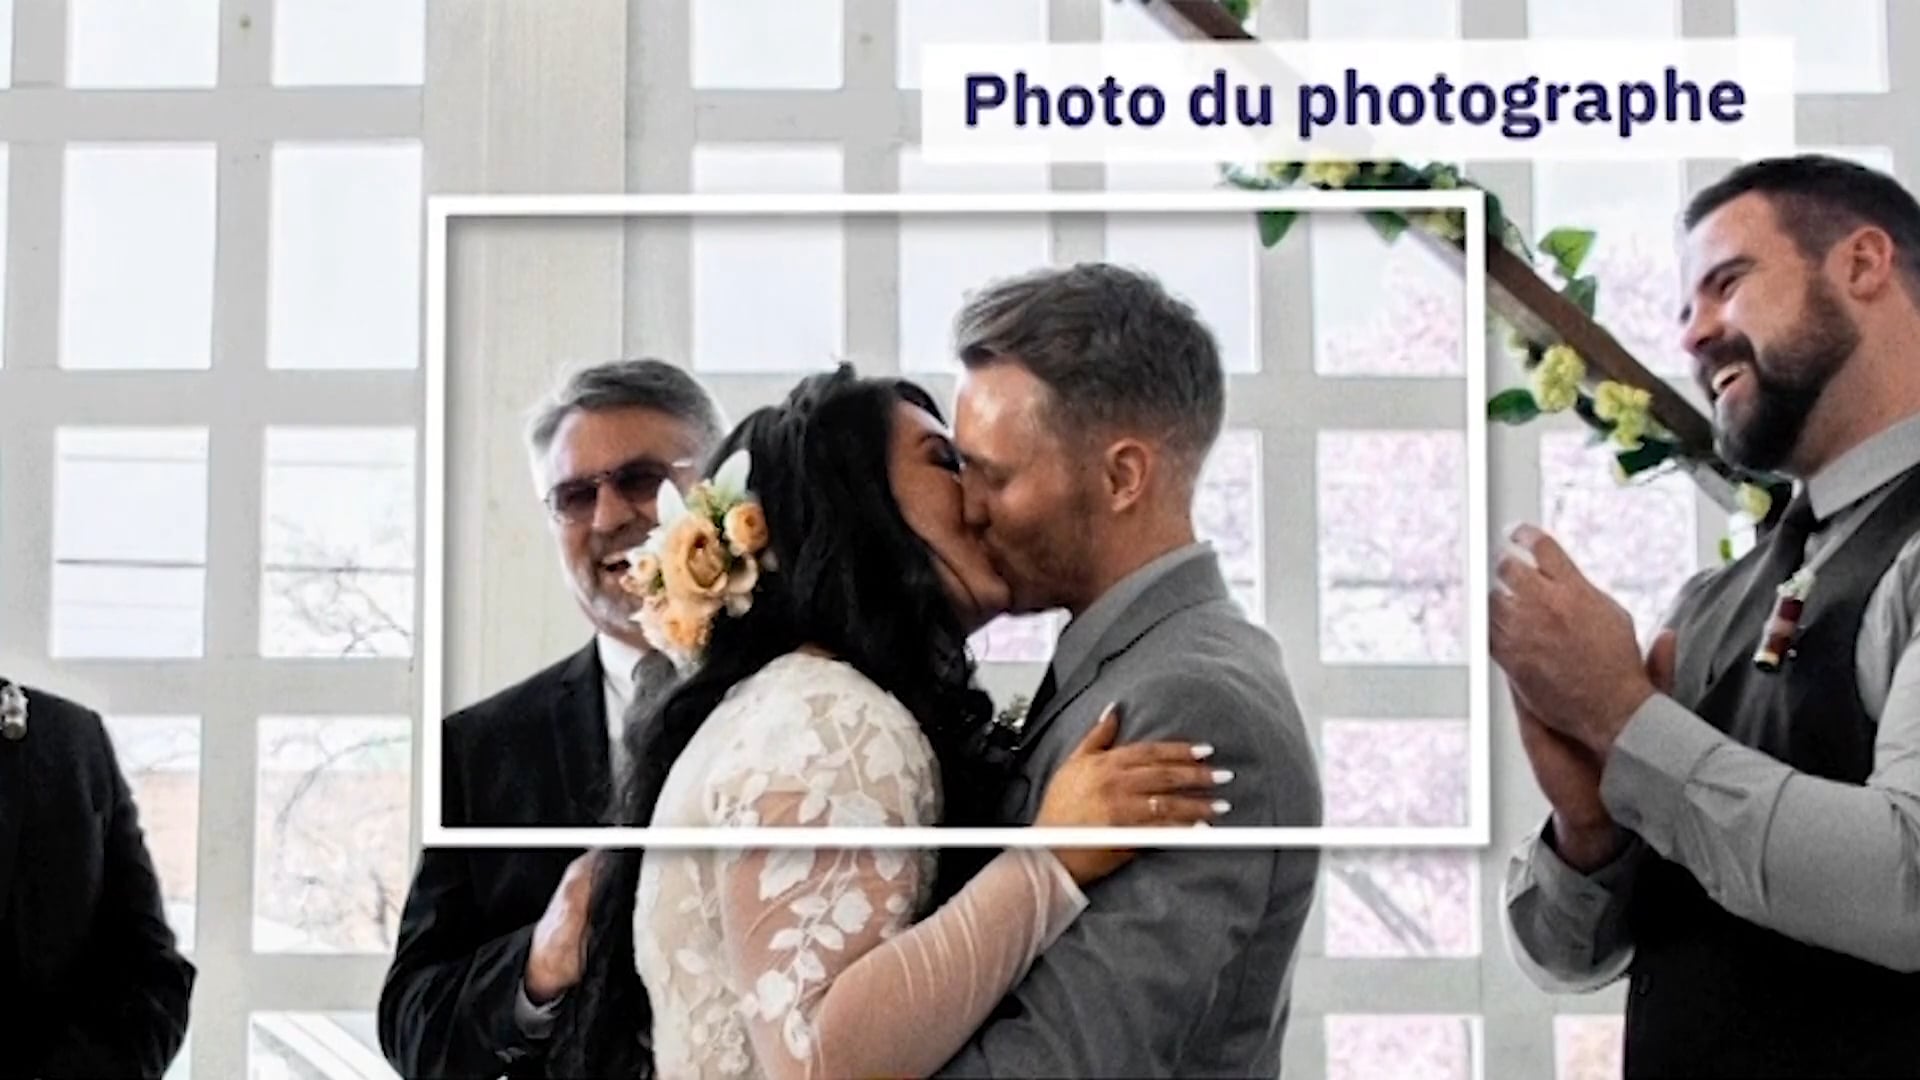 Memento Wedding - Animation photo 100% digitale